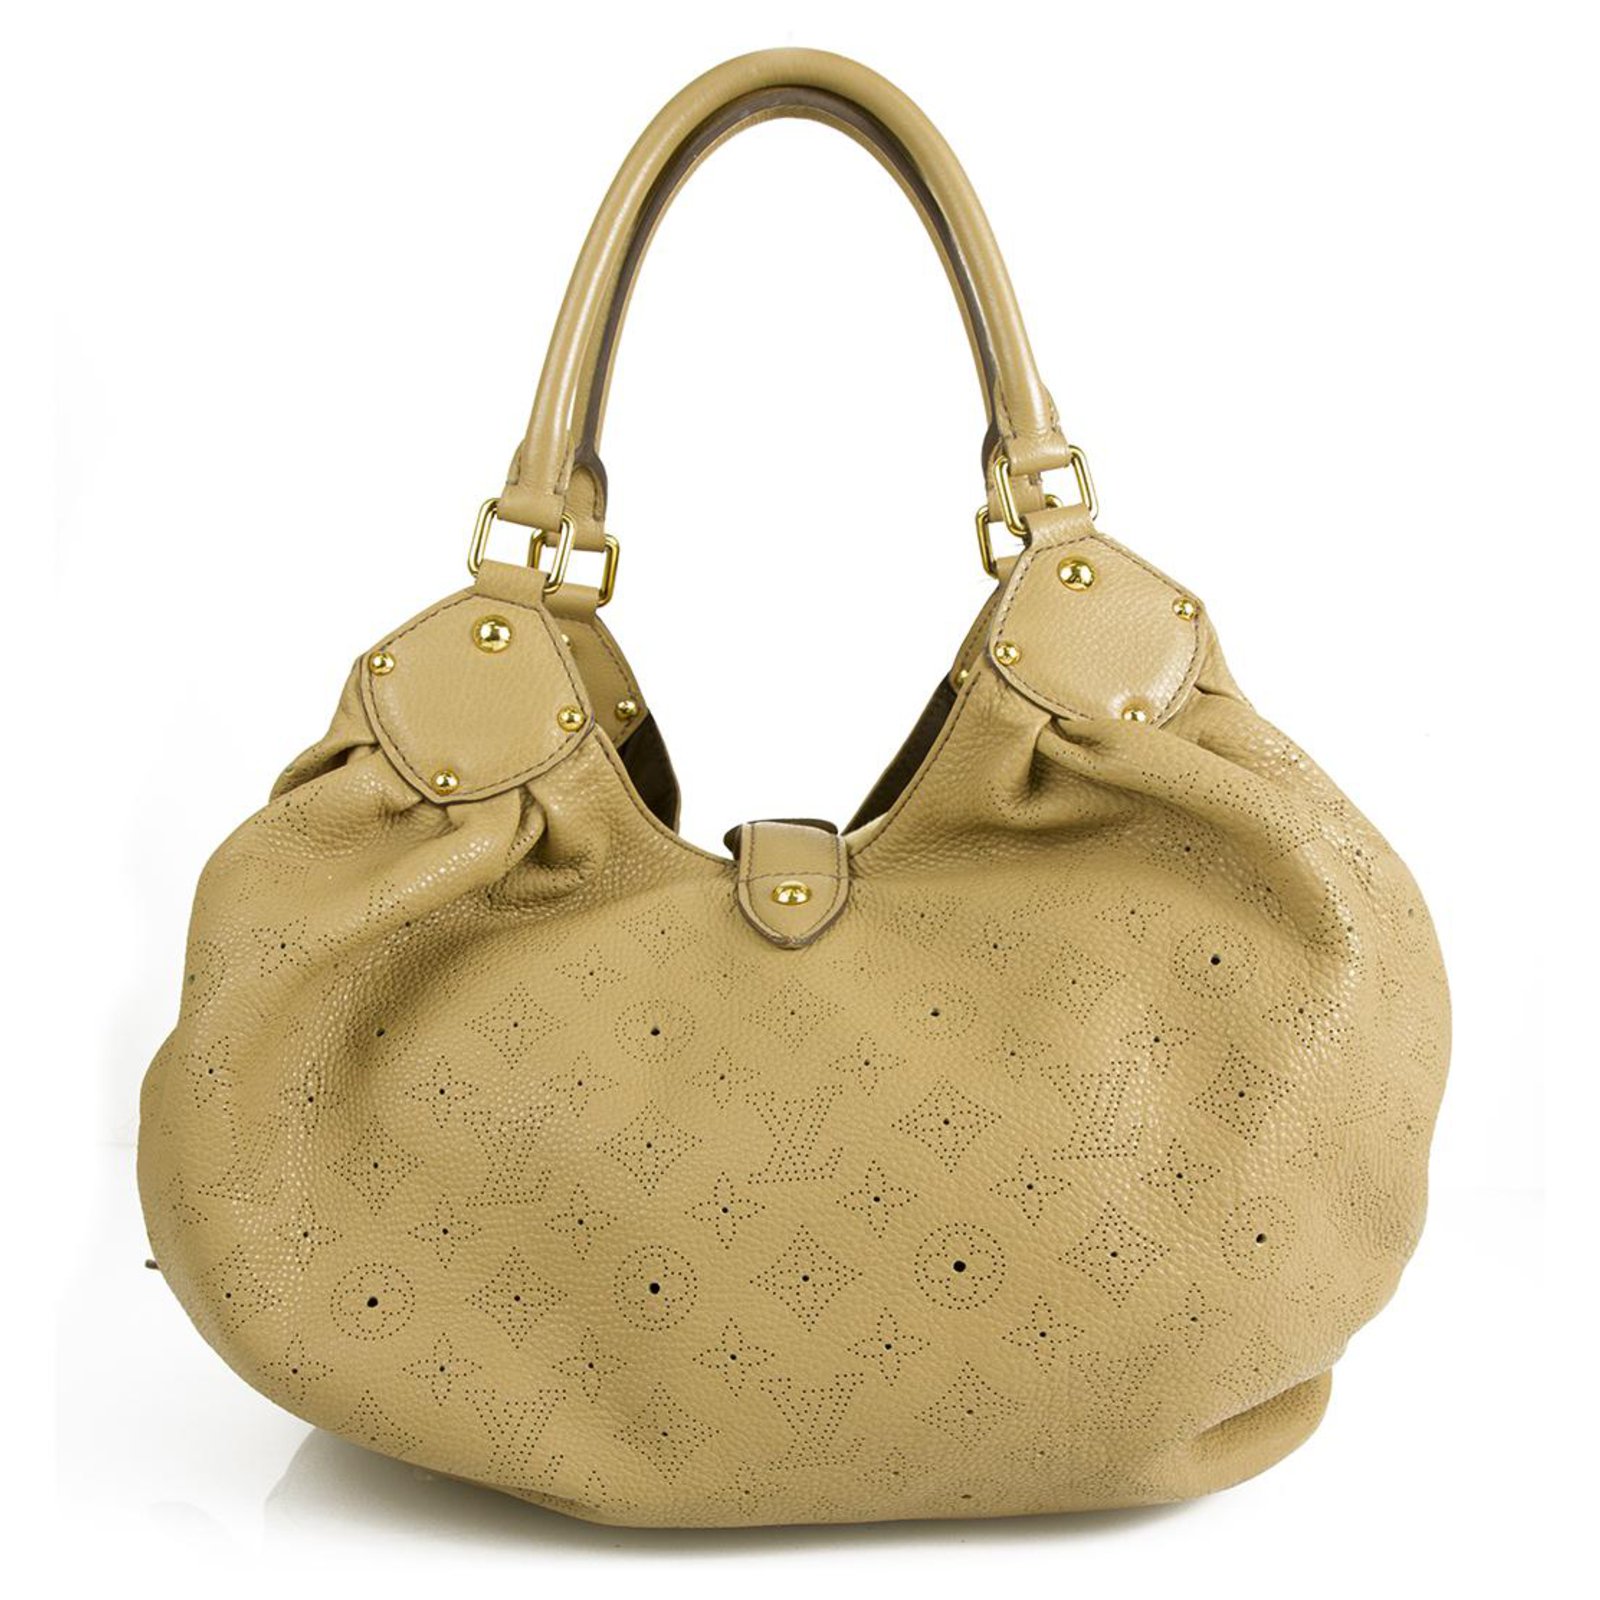 Louis Vuitton Beige Monogram Mahina Leather L Bag